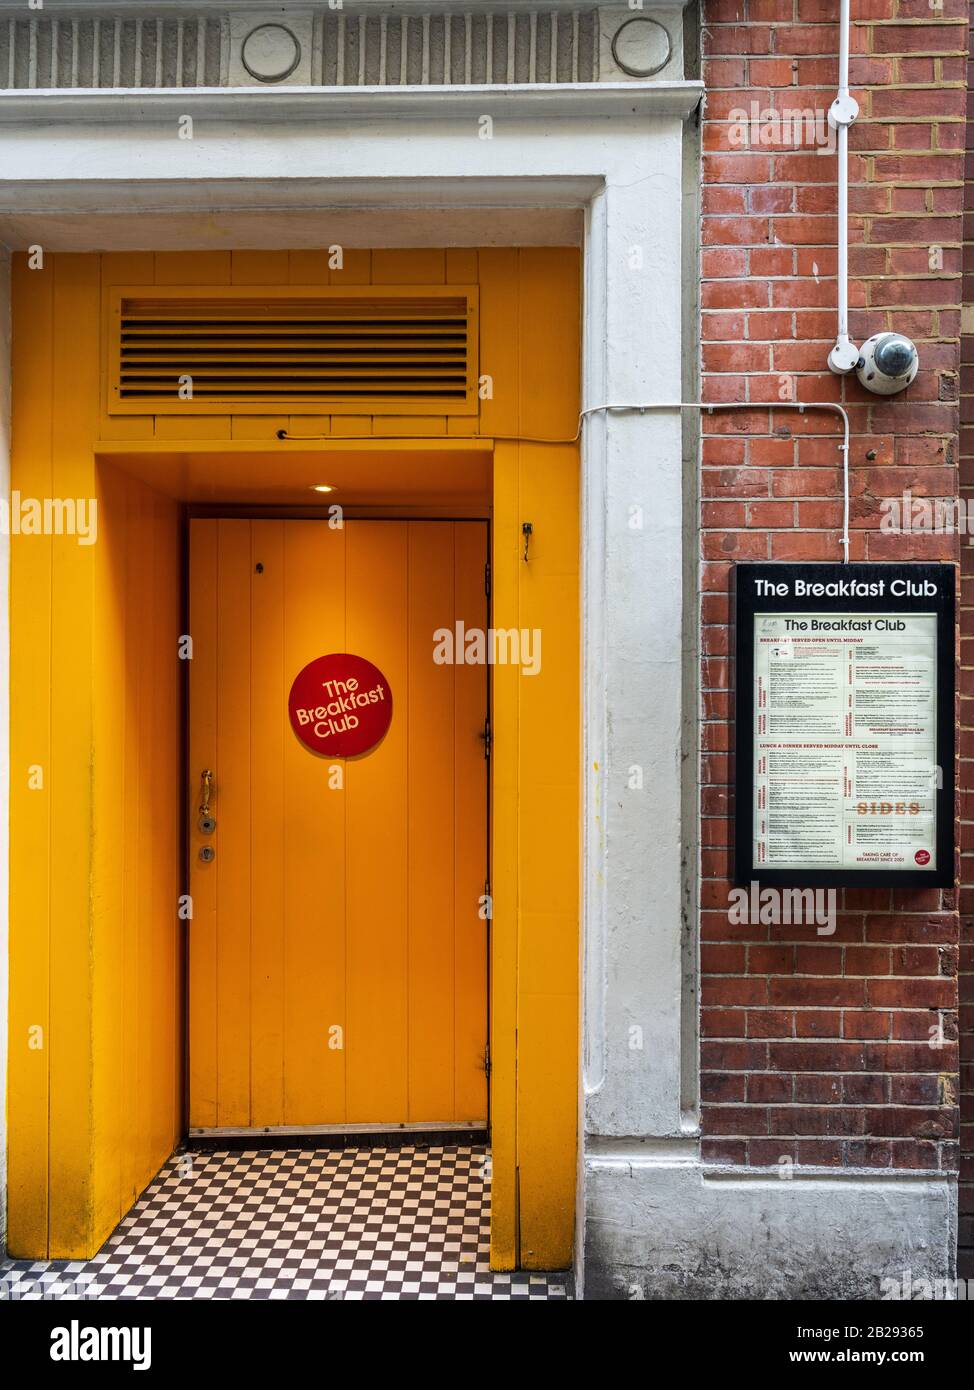 The Breakfast Club London - Doorway to the Breakfast Club Spitalfields restaurant Stock Photo